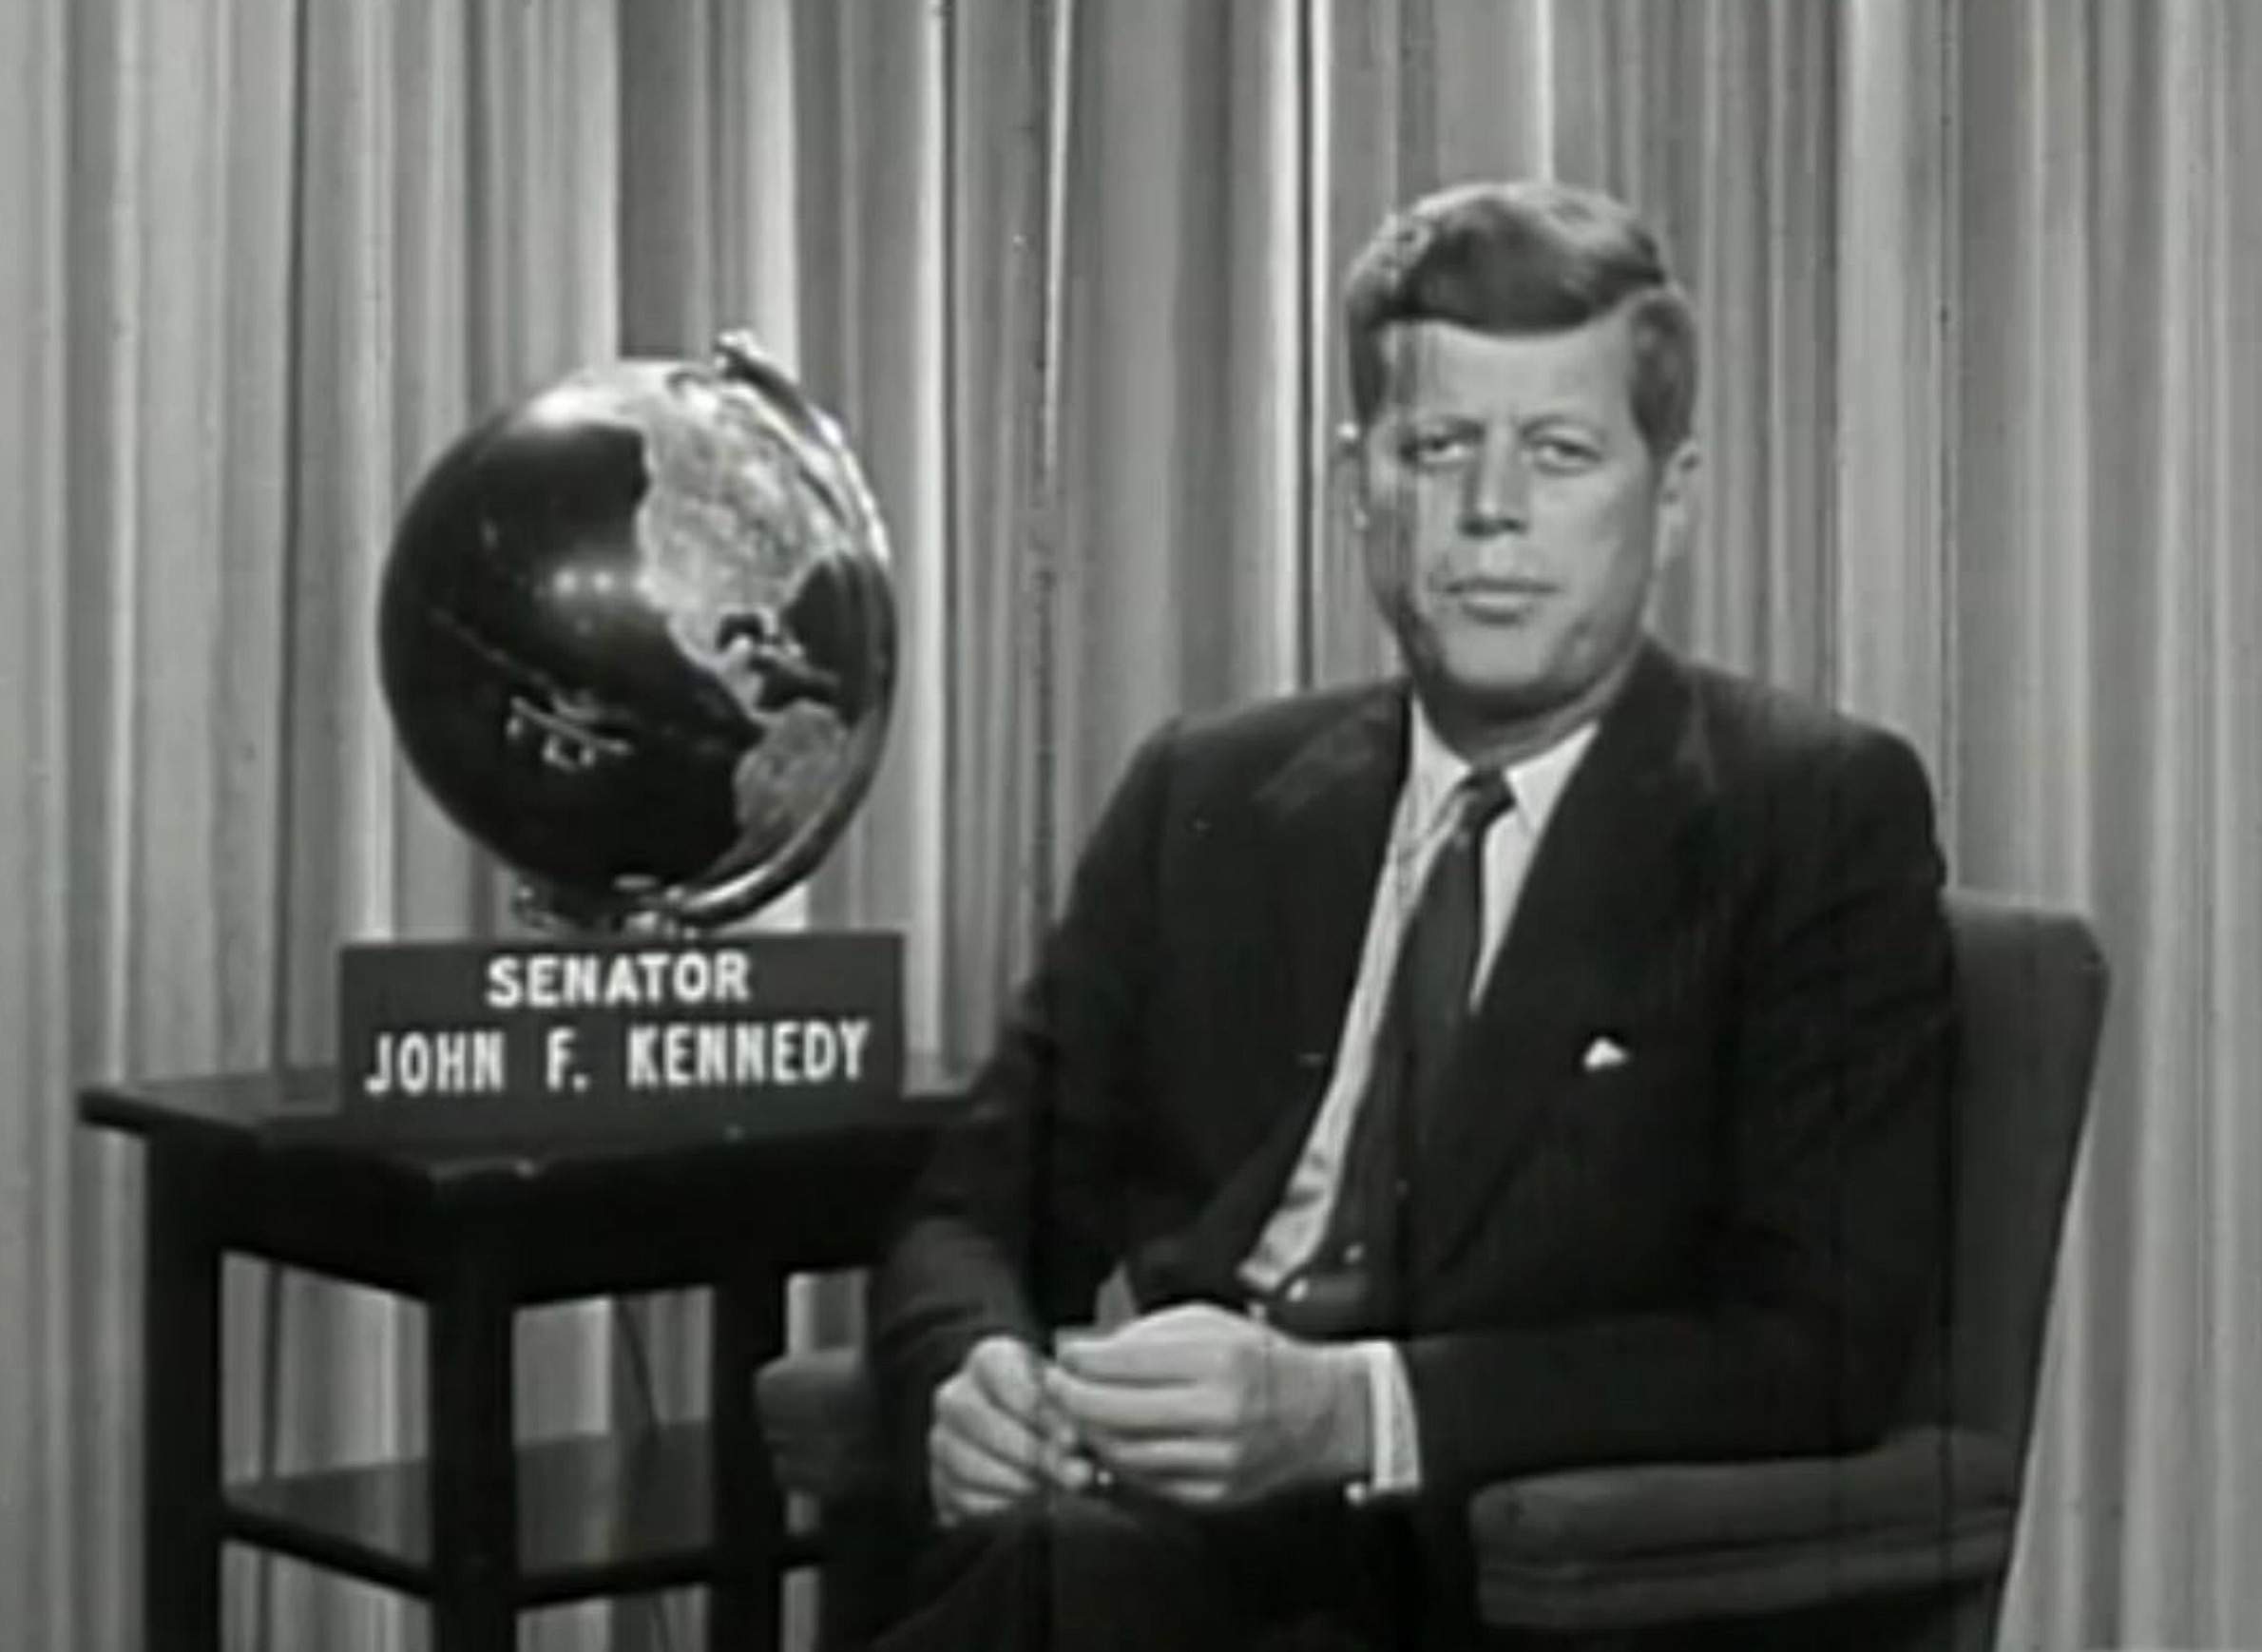 JFK campaigns in Wisconsin in 1960